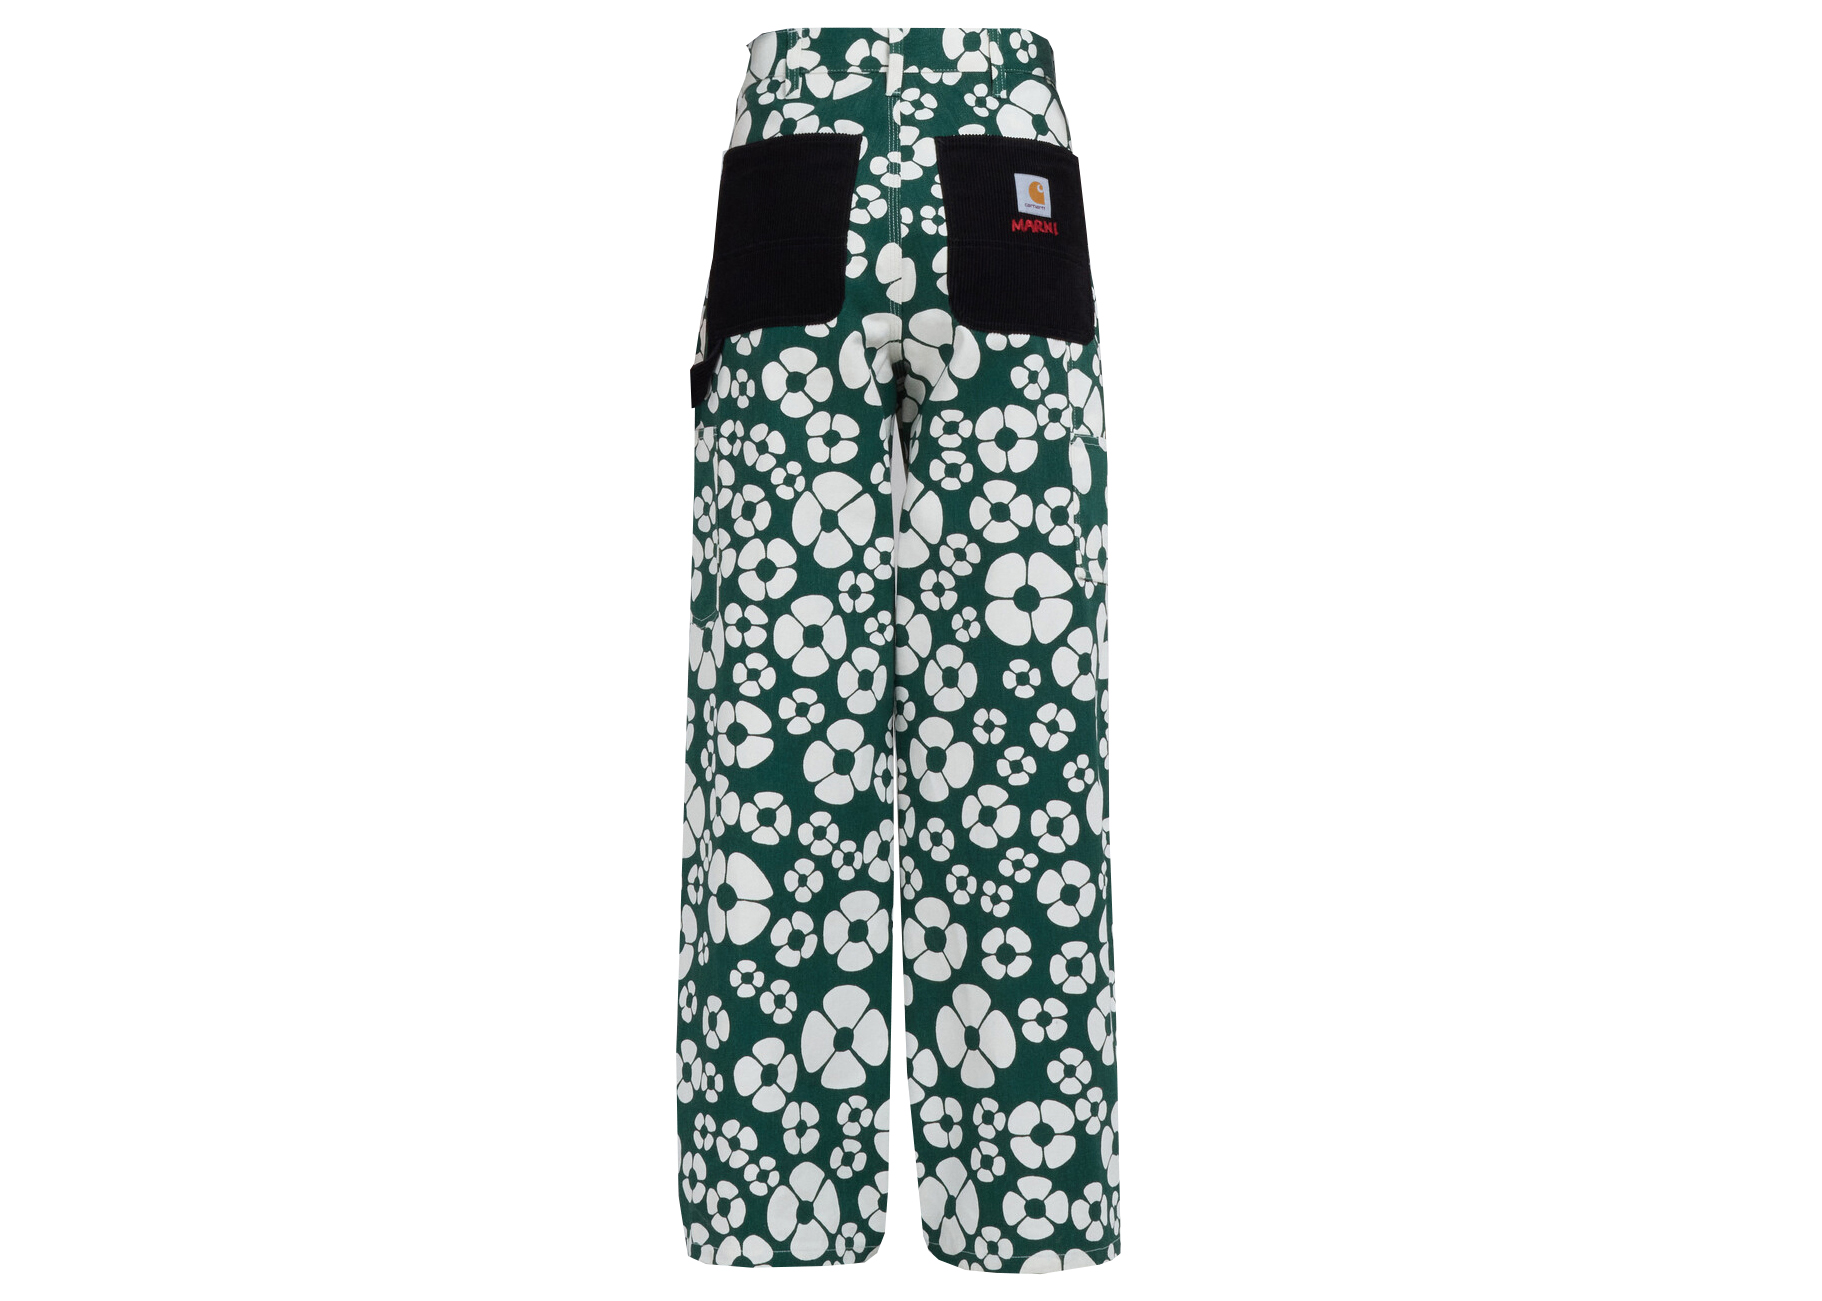 Marni x Carhartt Canvas Pants Green Floral